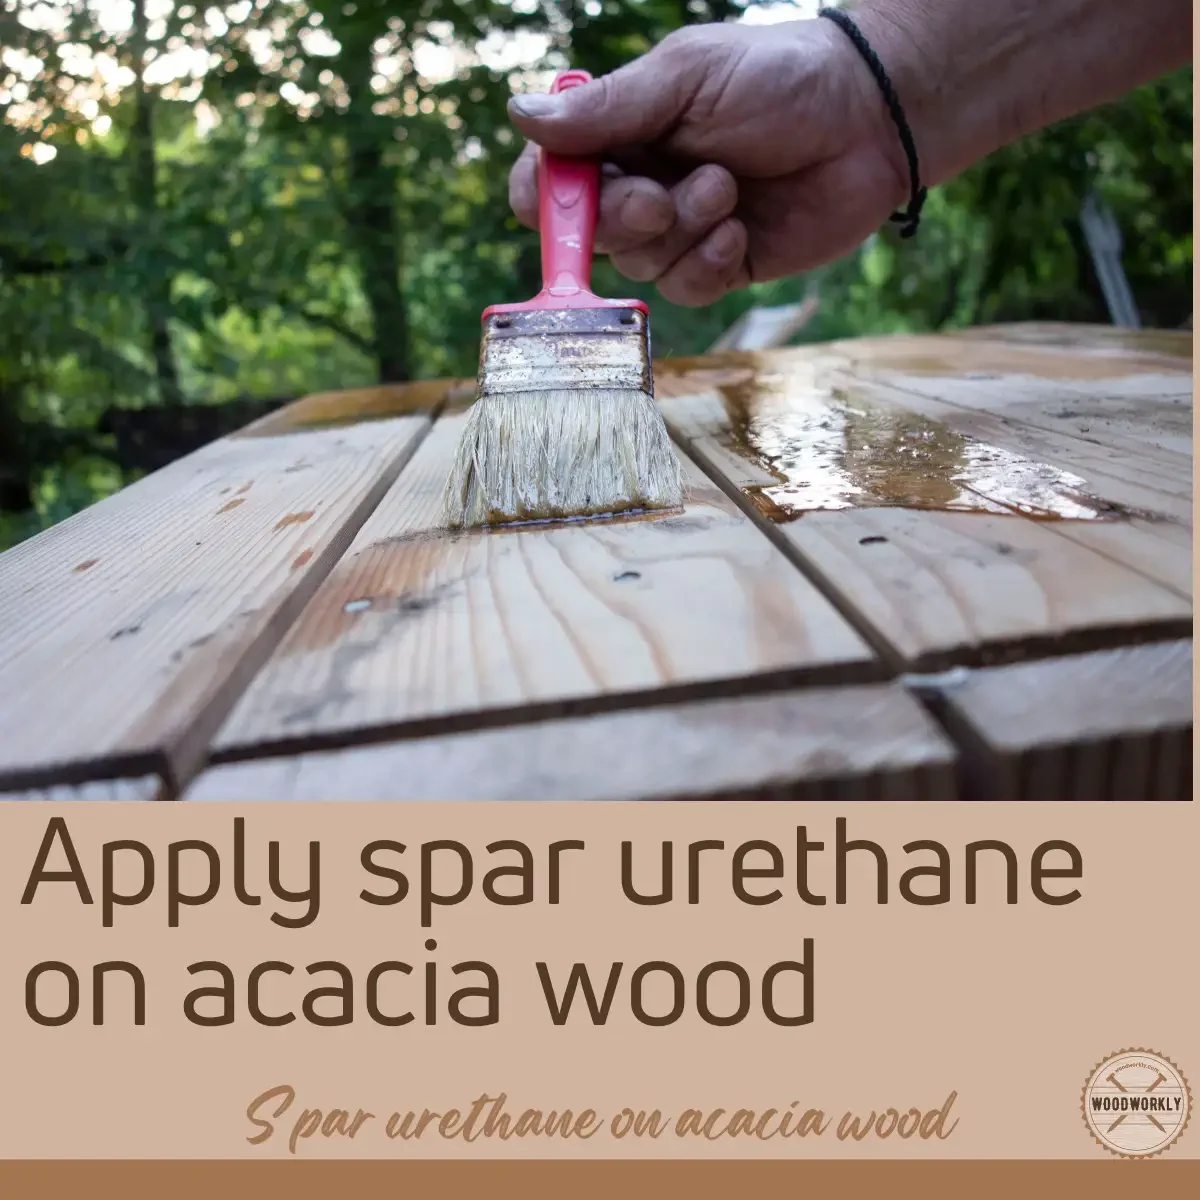 Apply spar urethane on acacia wood